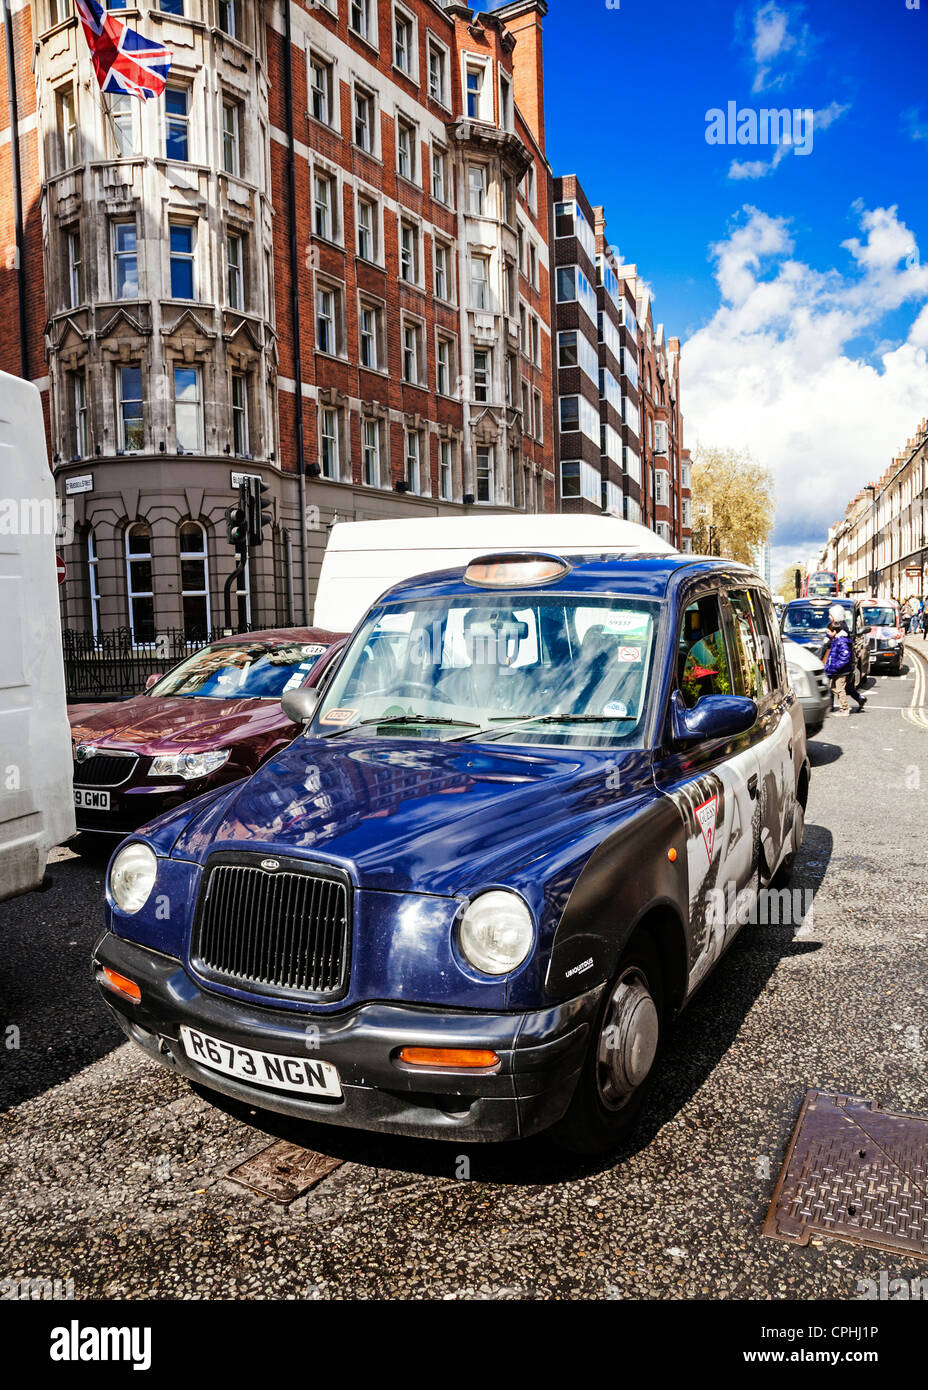 Taxi de Londres, Londres, Inglaterra. Foto de stock